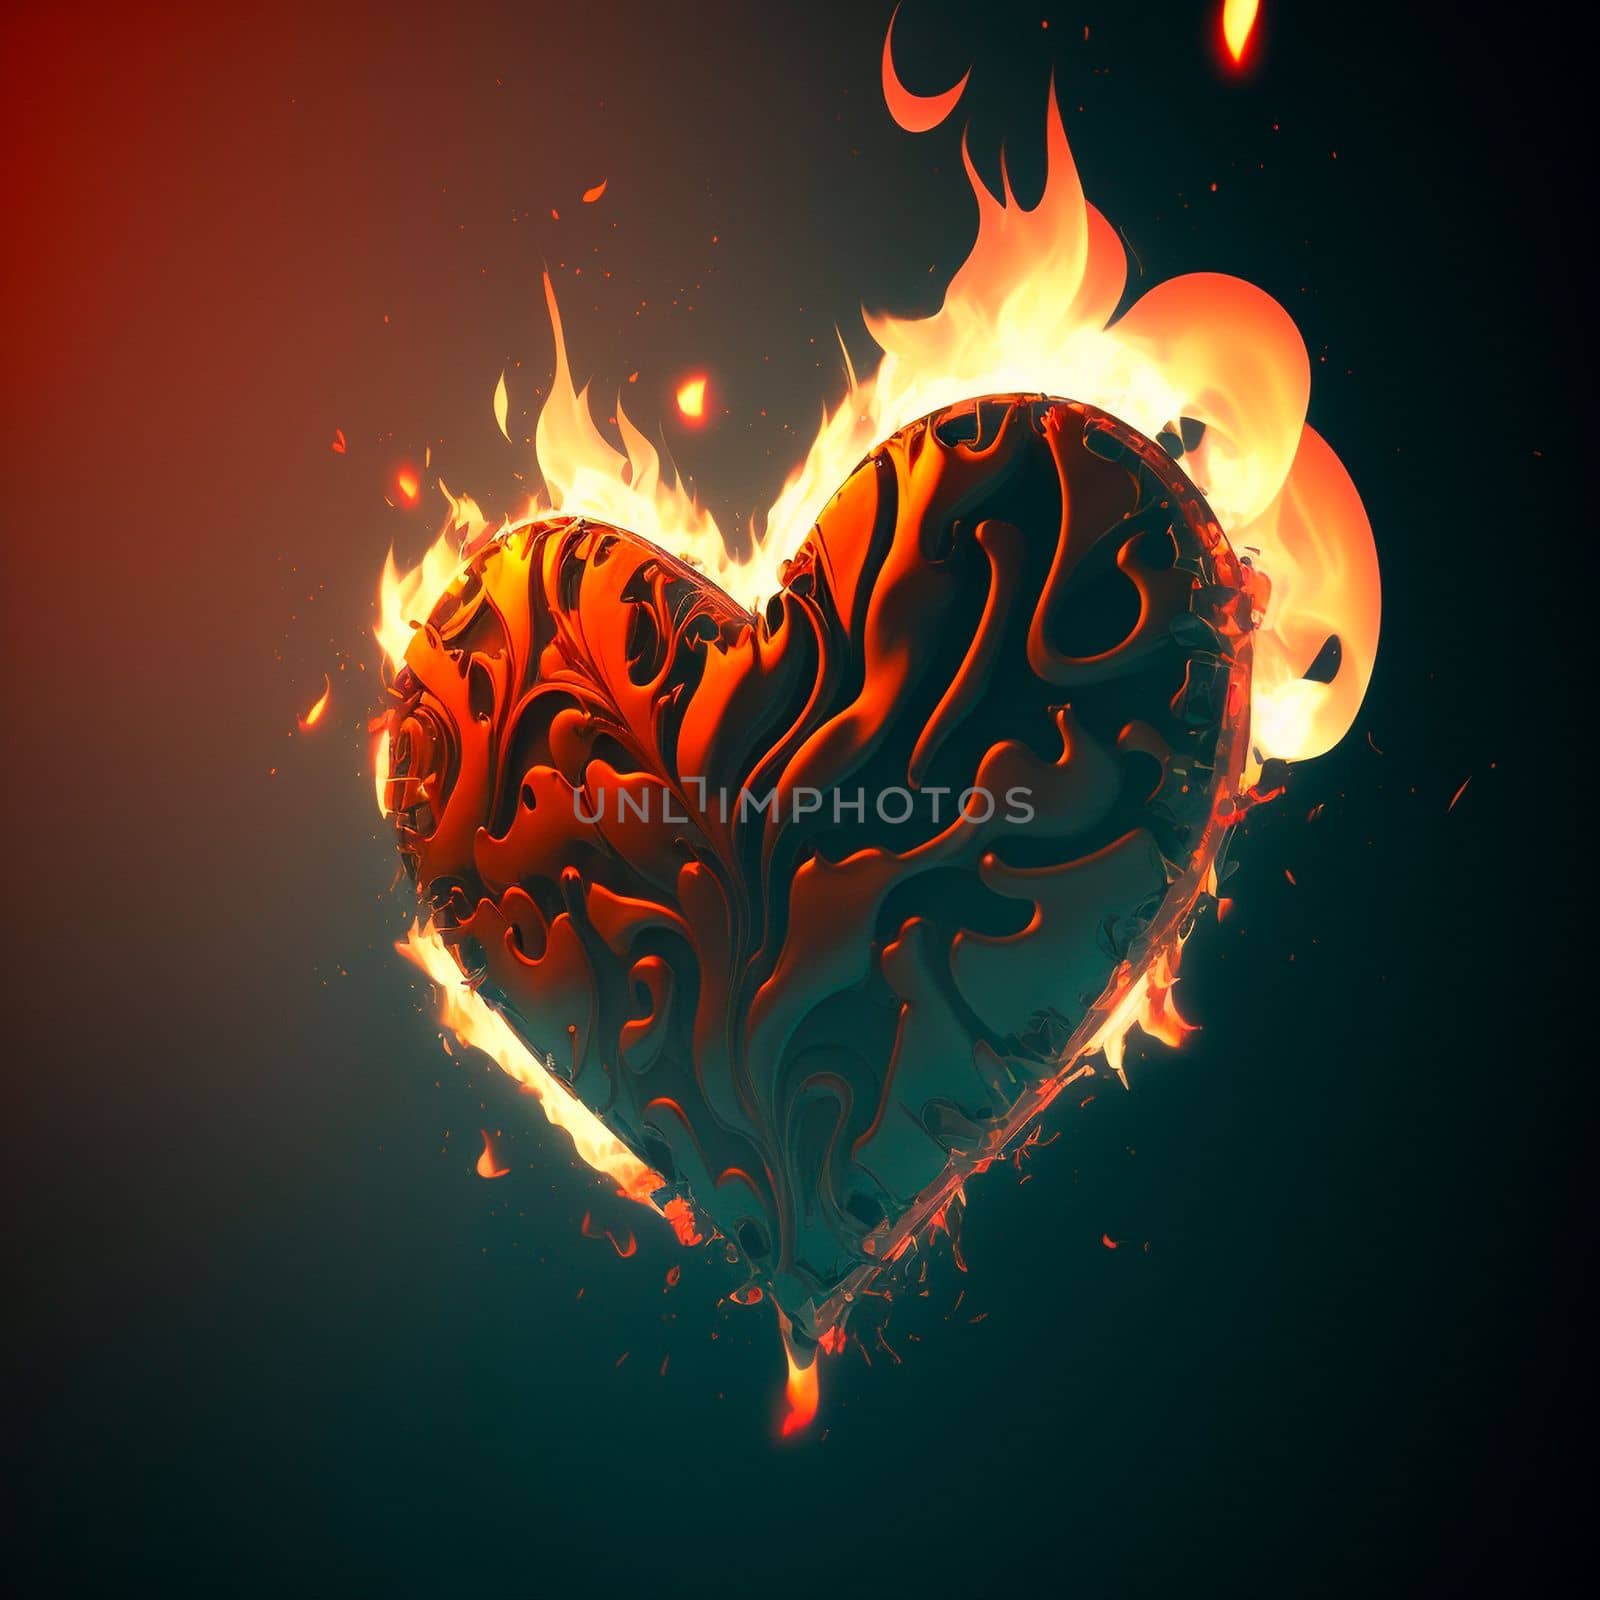 A heart in flames by NeuroSky